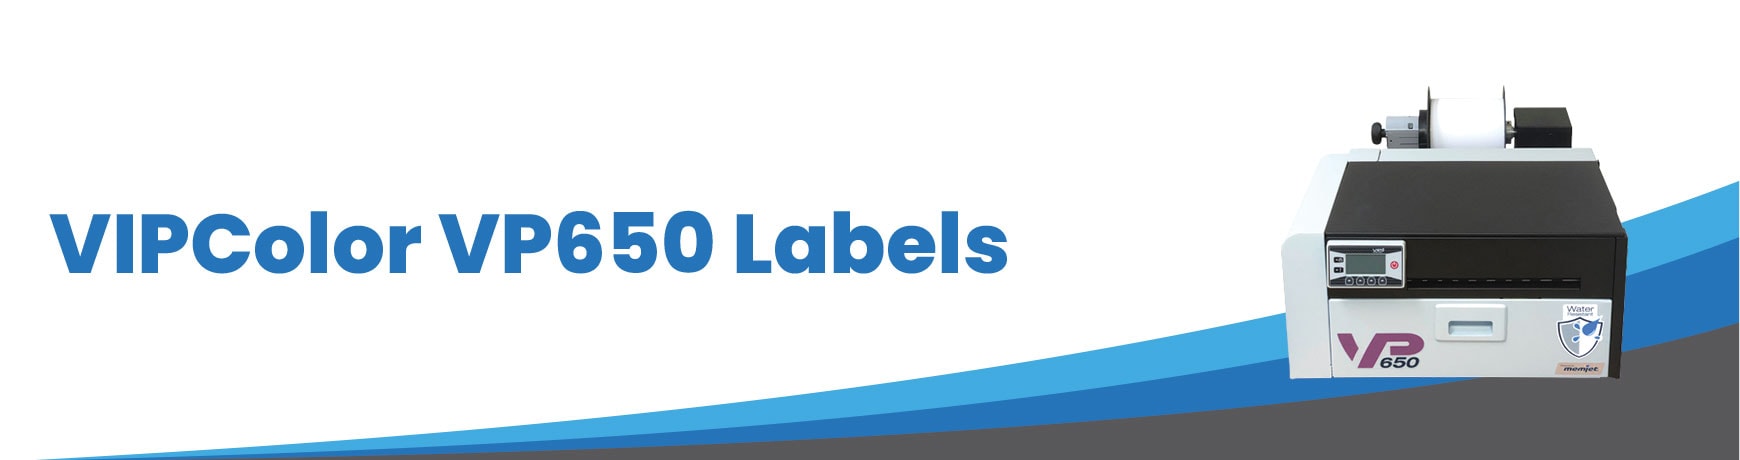 VIPColor VP650 Labels